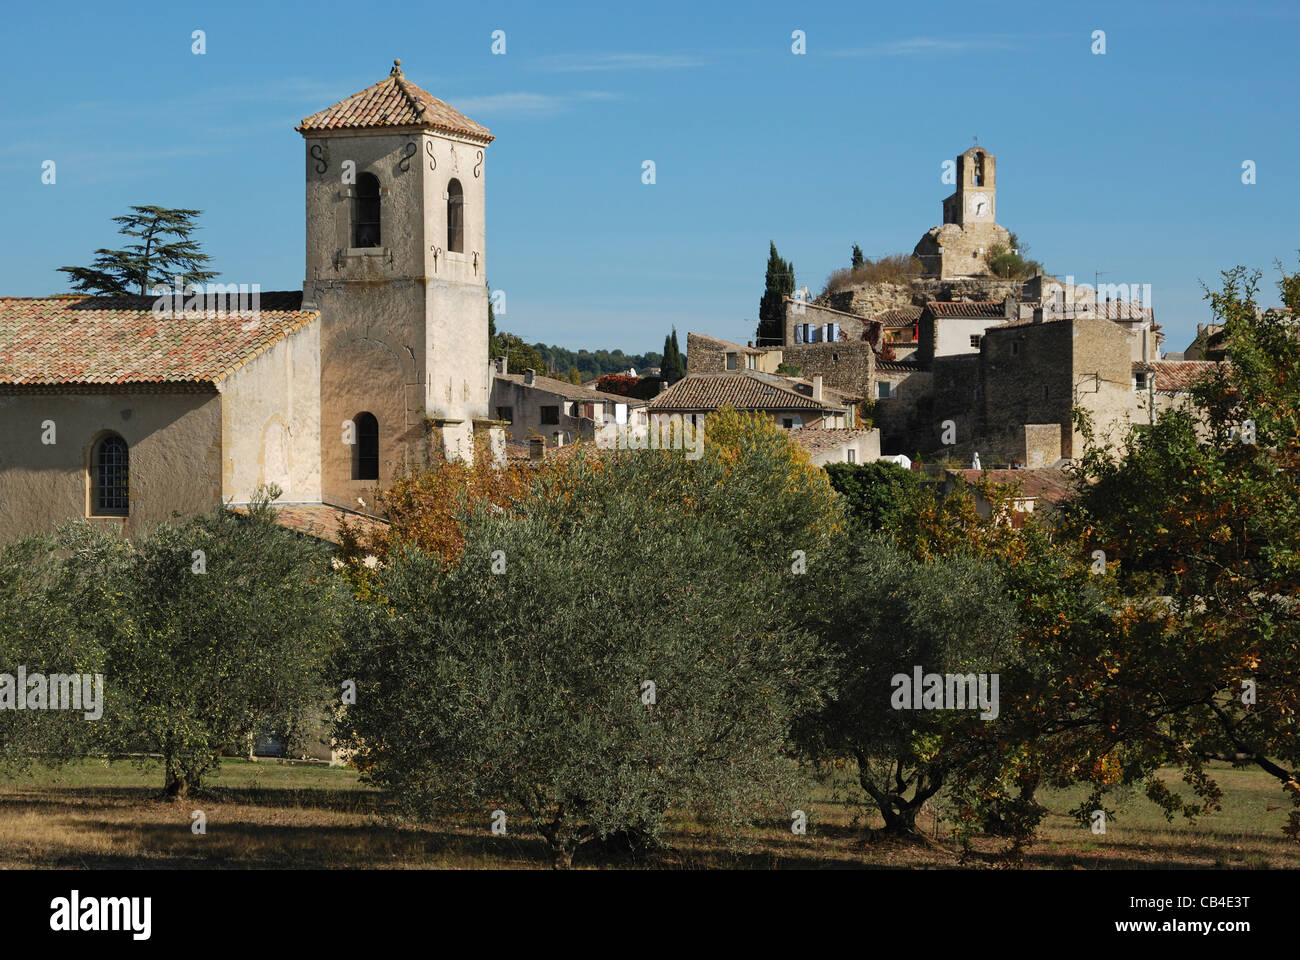 Tempel de Lourmarin mit dem Uhrturm Hügel im Hintergrund. Lourmarin, Provence, Frankreich. Stockfoto